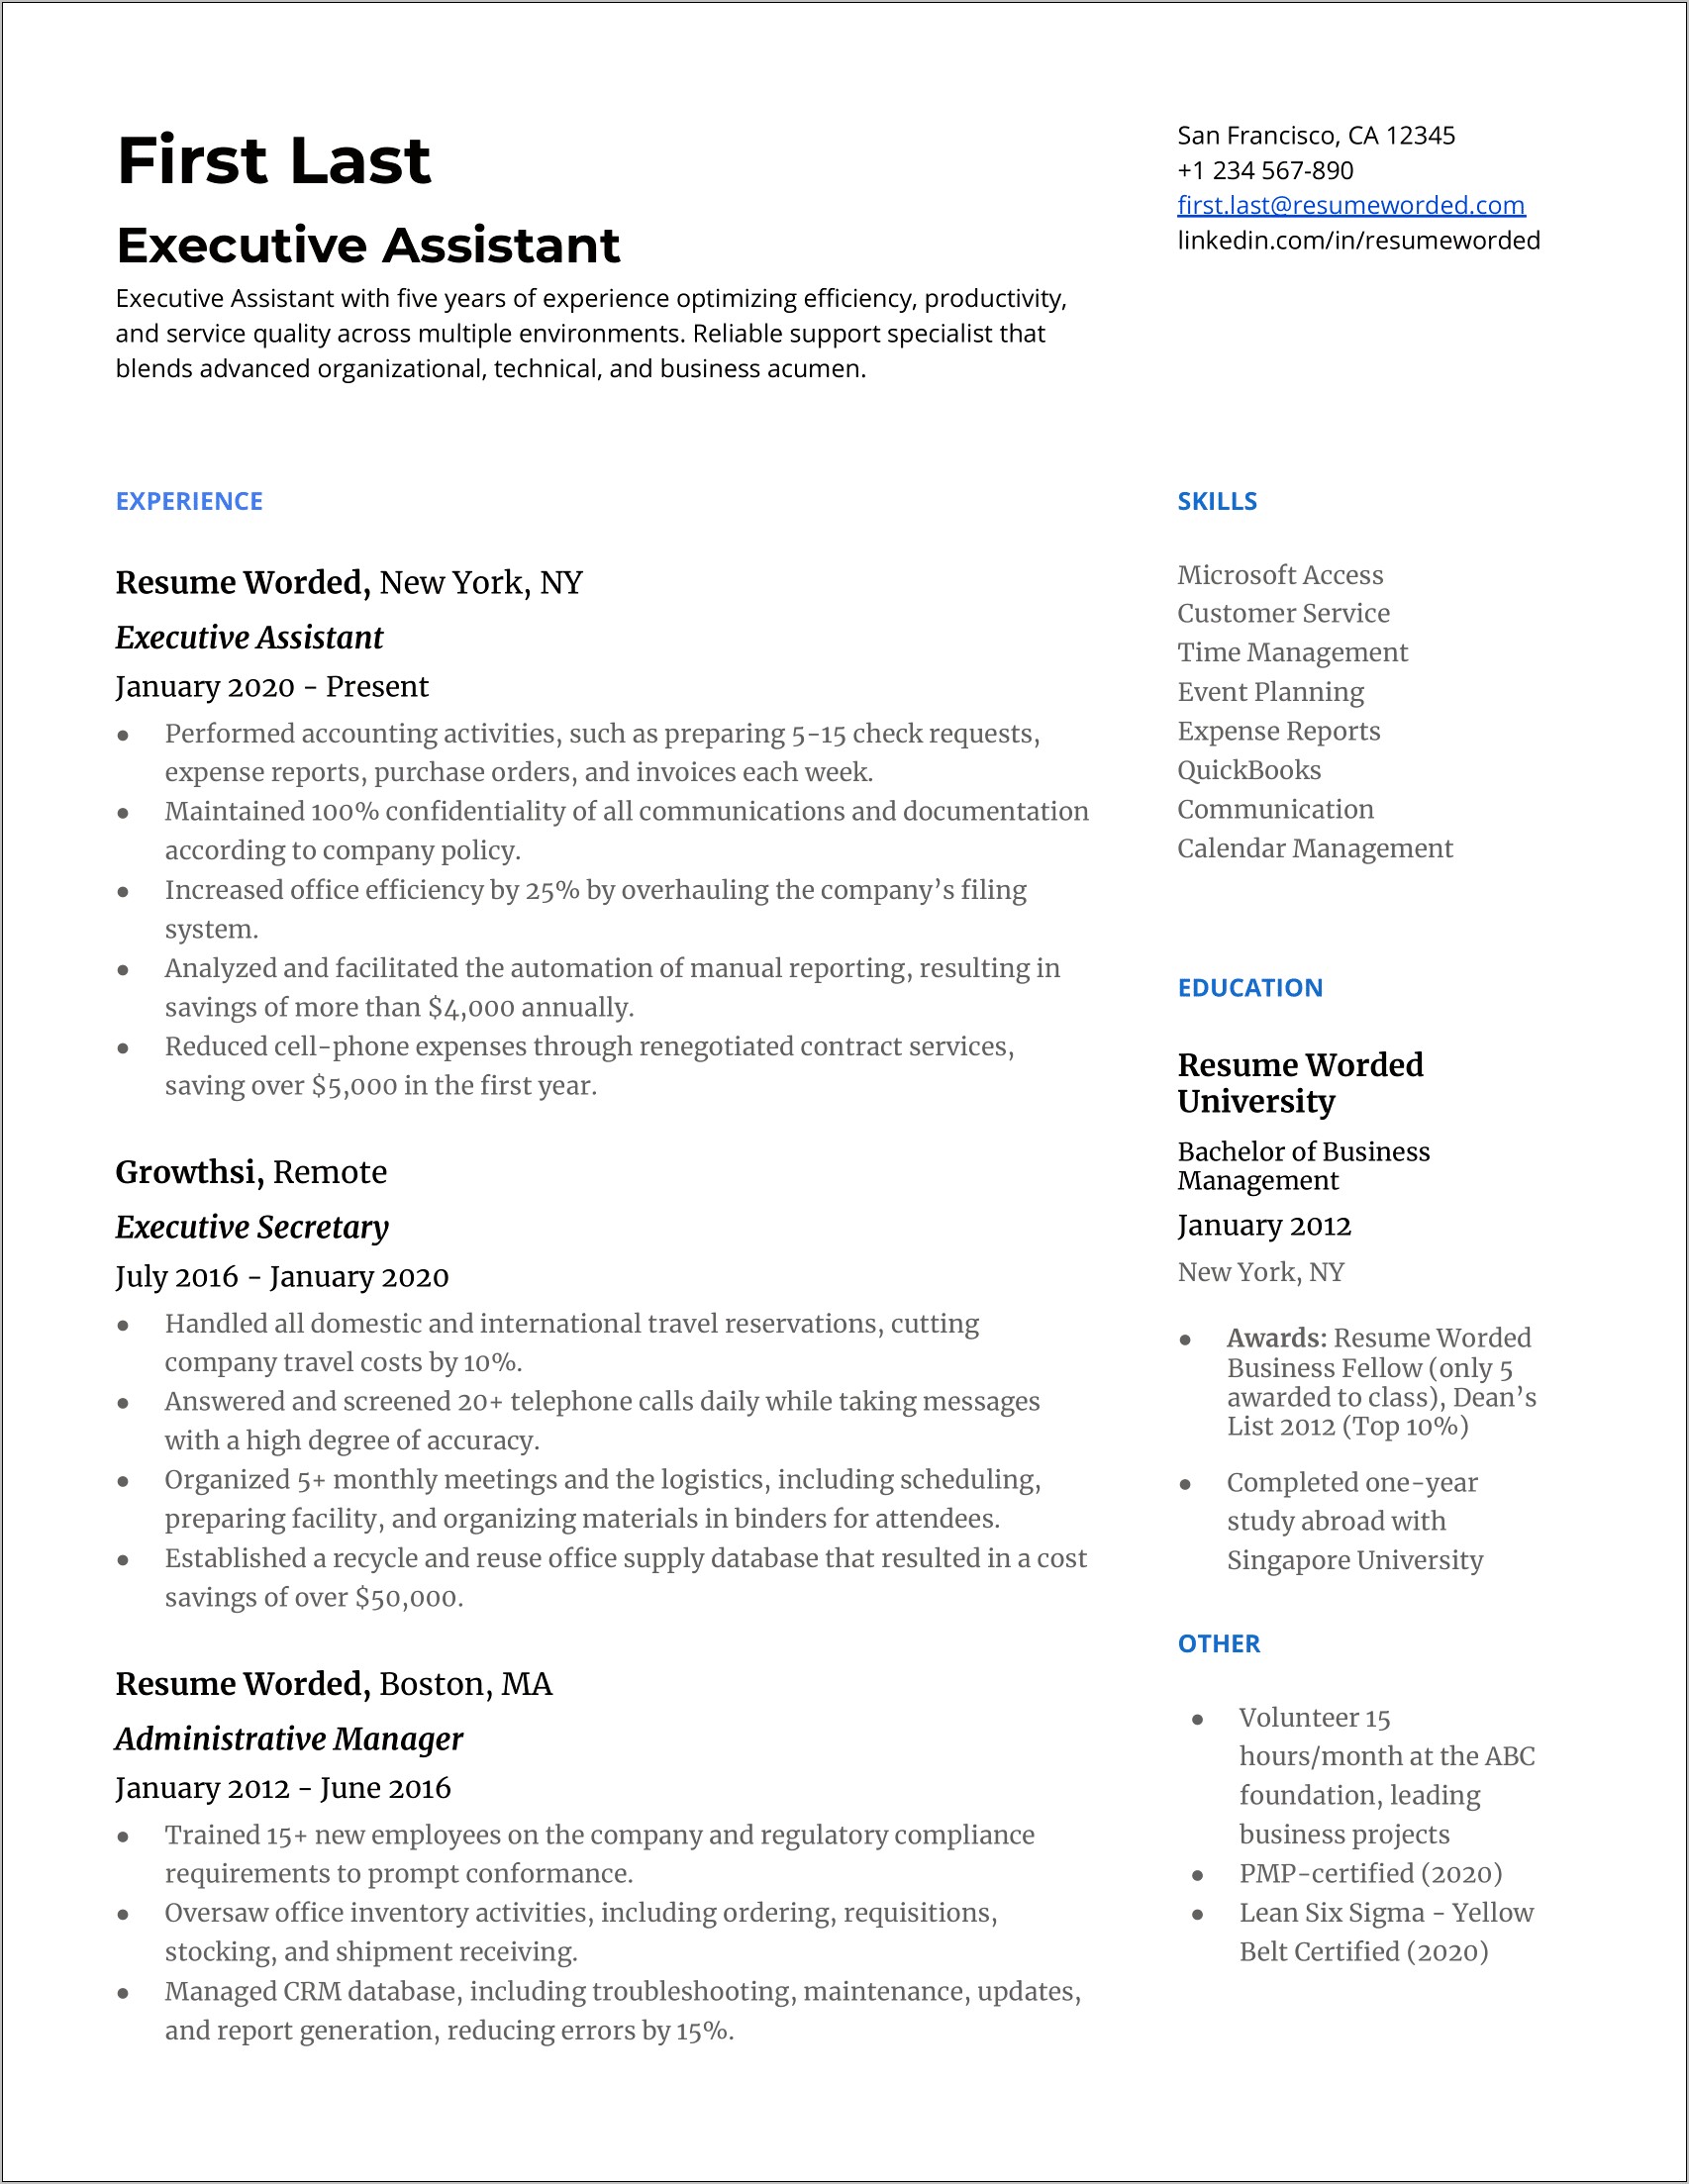 Resume Description For Organizational Mangment Office